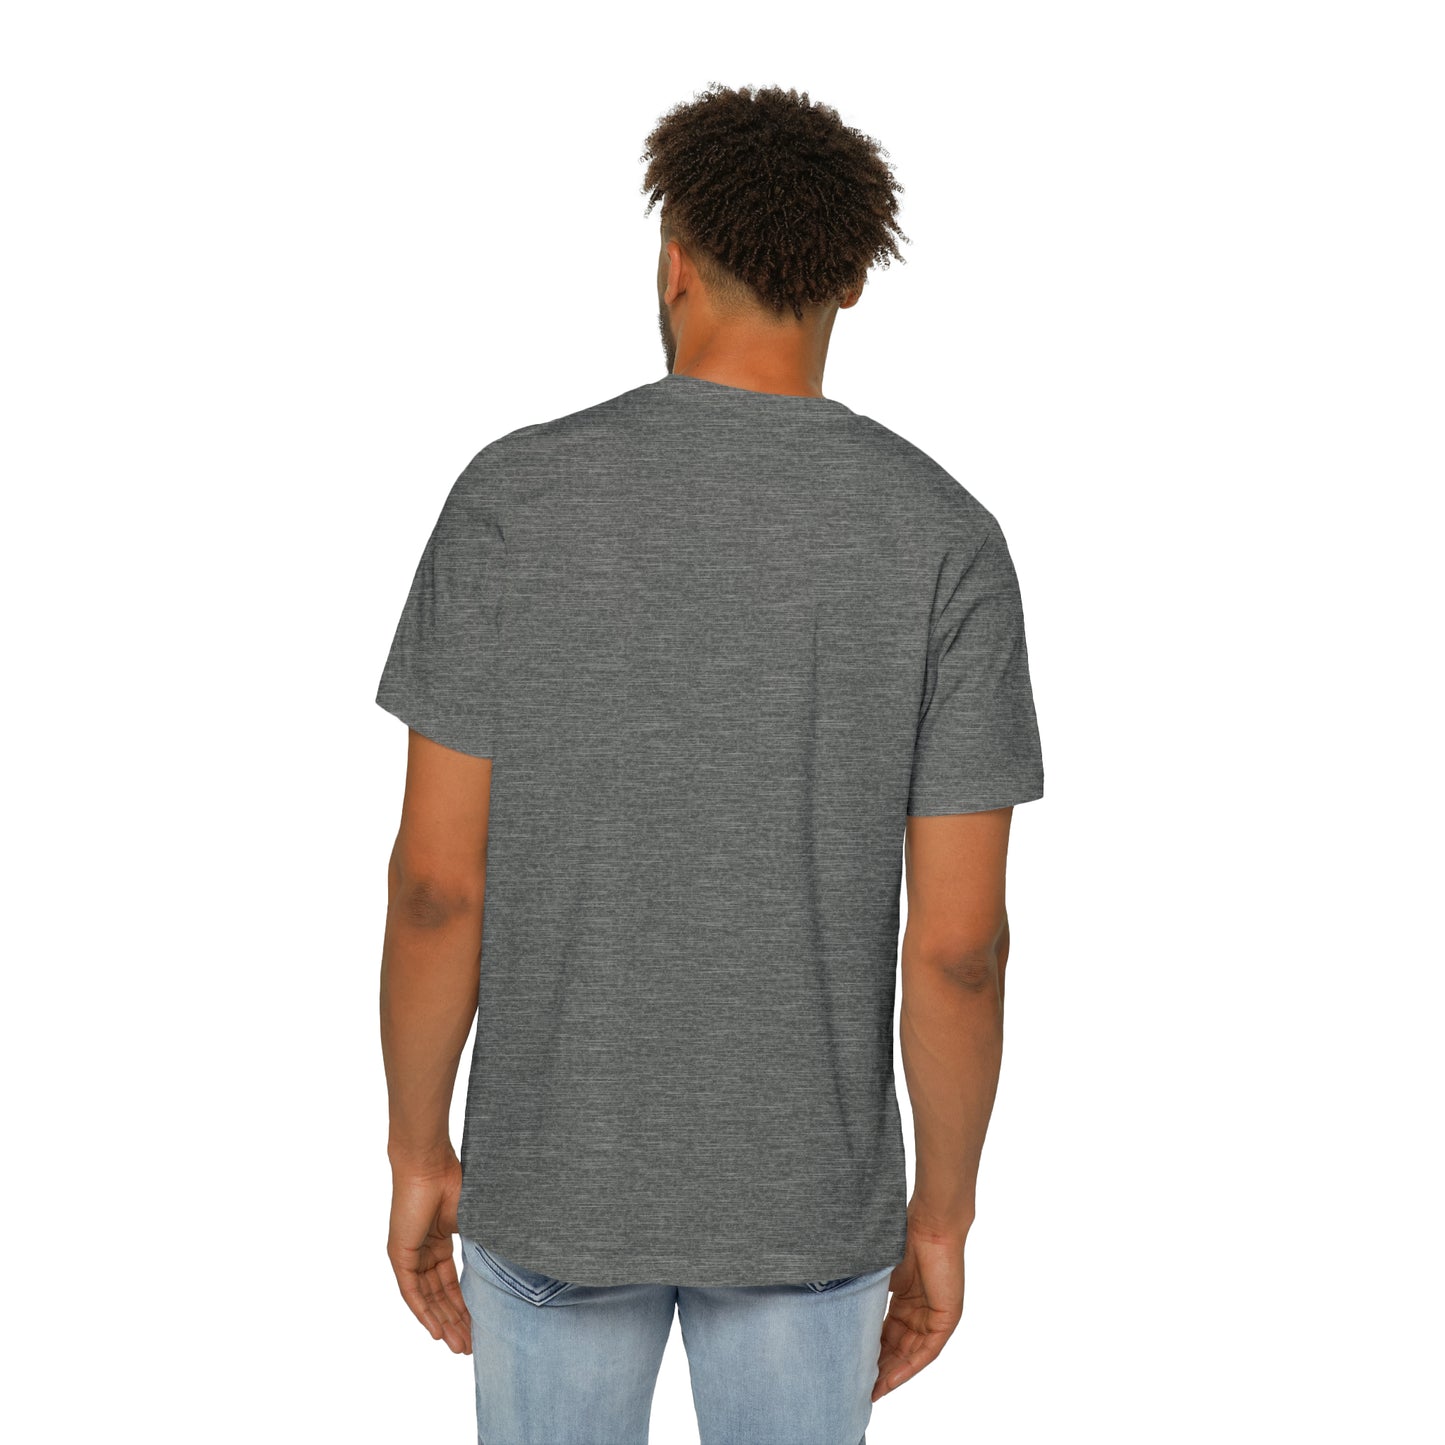 Aerosexual Club USA-Made Unisex Short-Sleeve Jersey T-Shirt